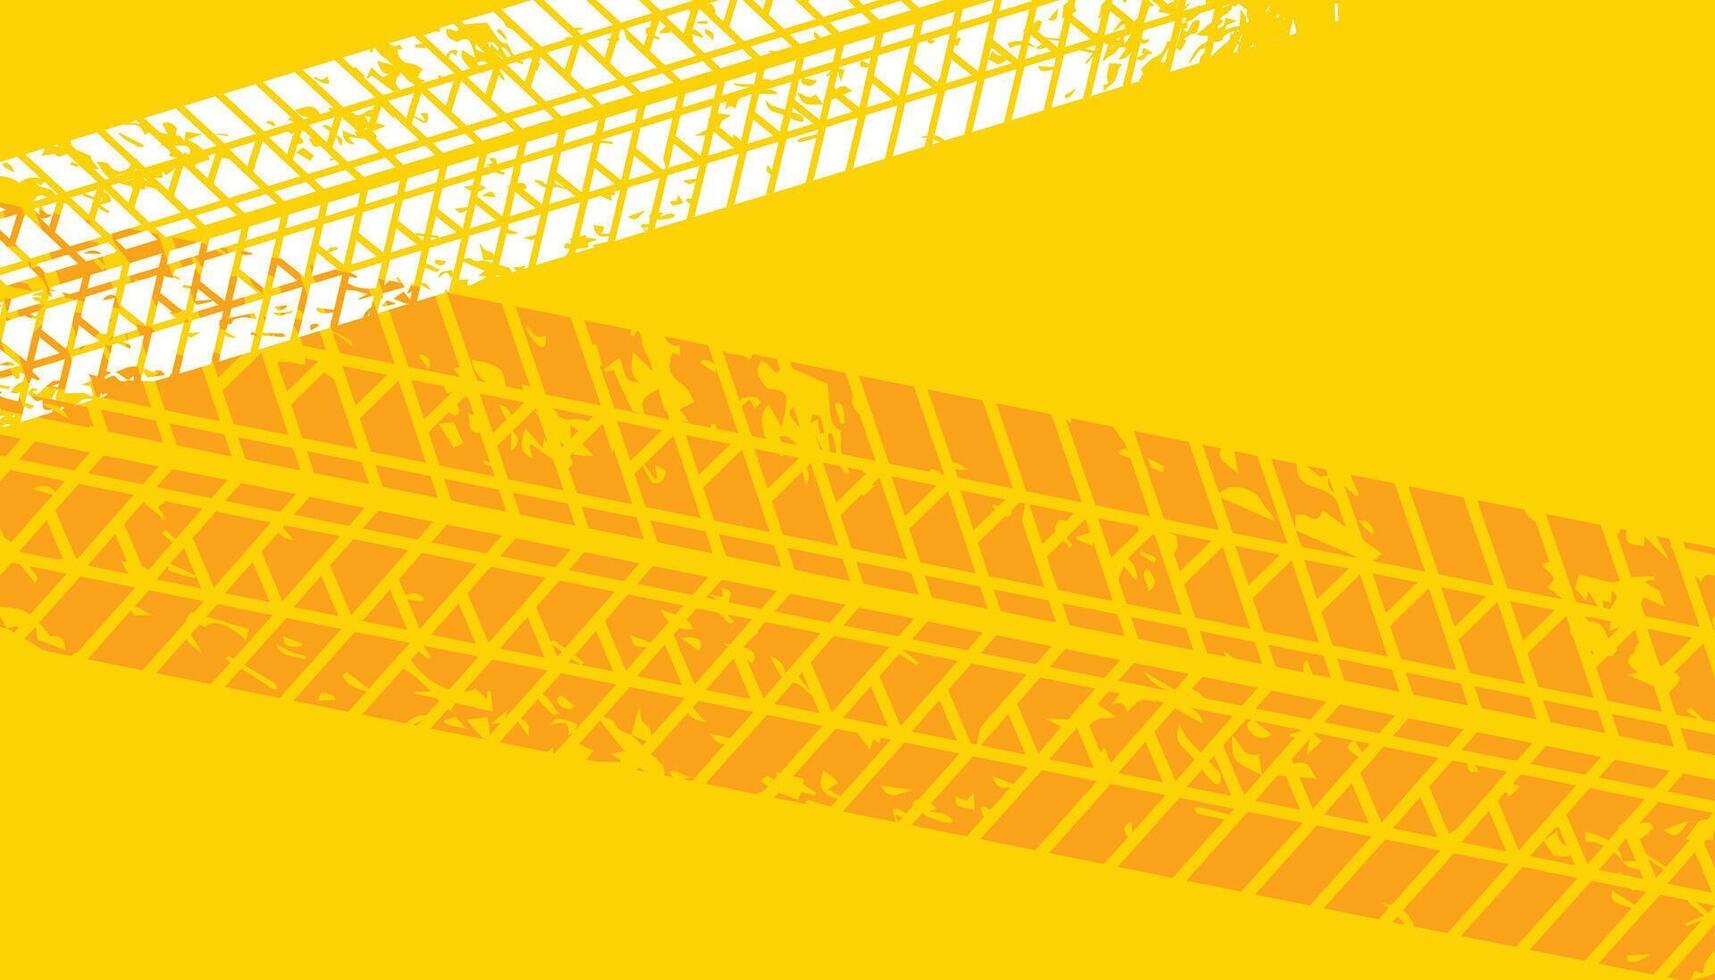 yellow tire tracks imprint background design vector